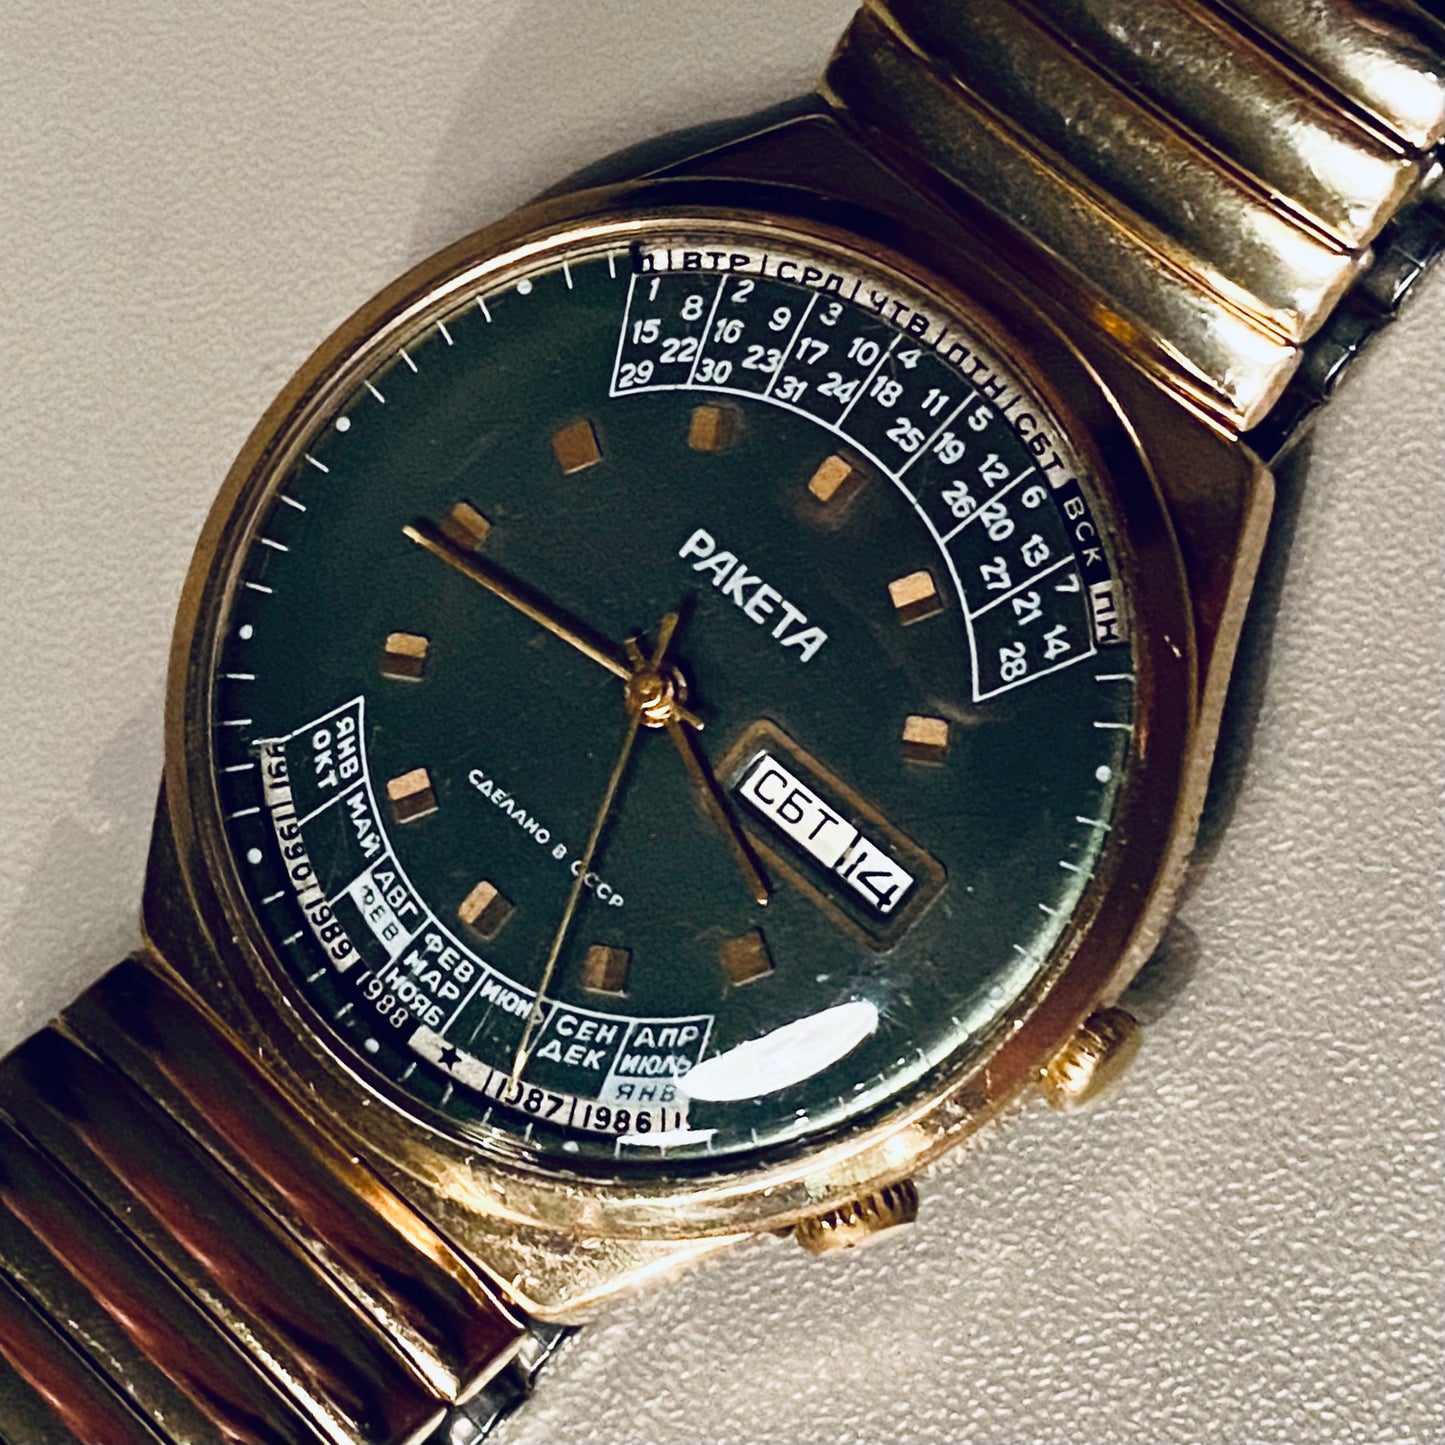 Raketa, mechanical watch, Perpetual Calendar, USSR (CCCP), 1980s